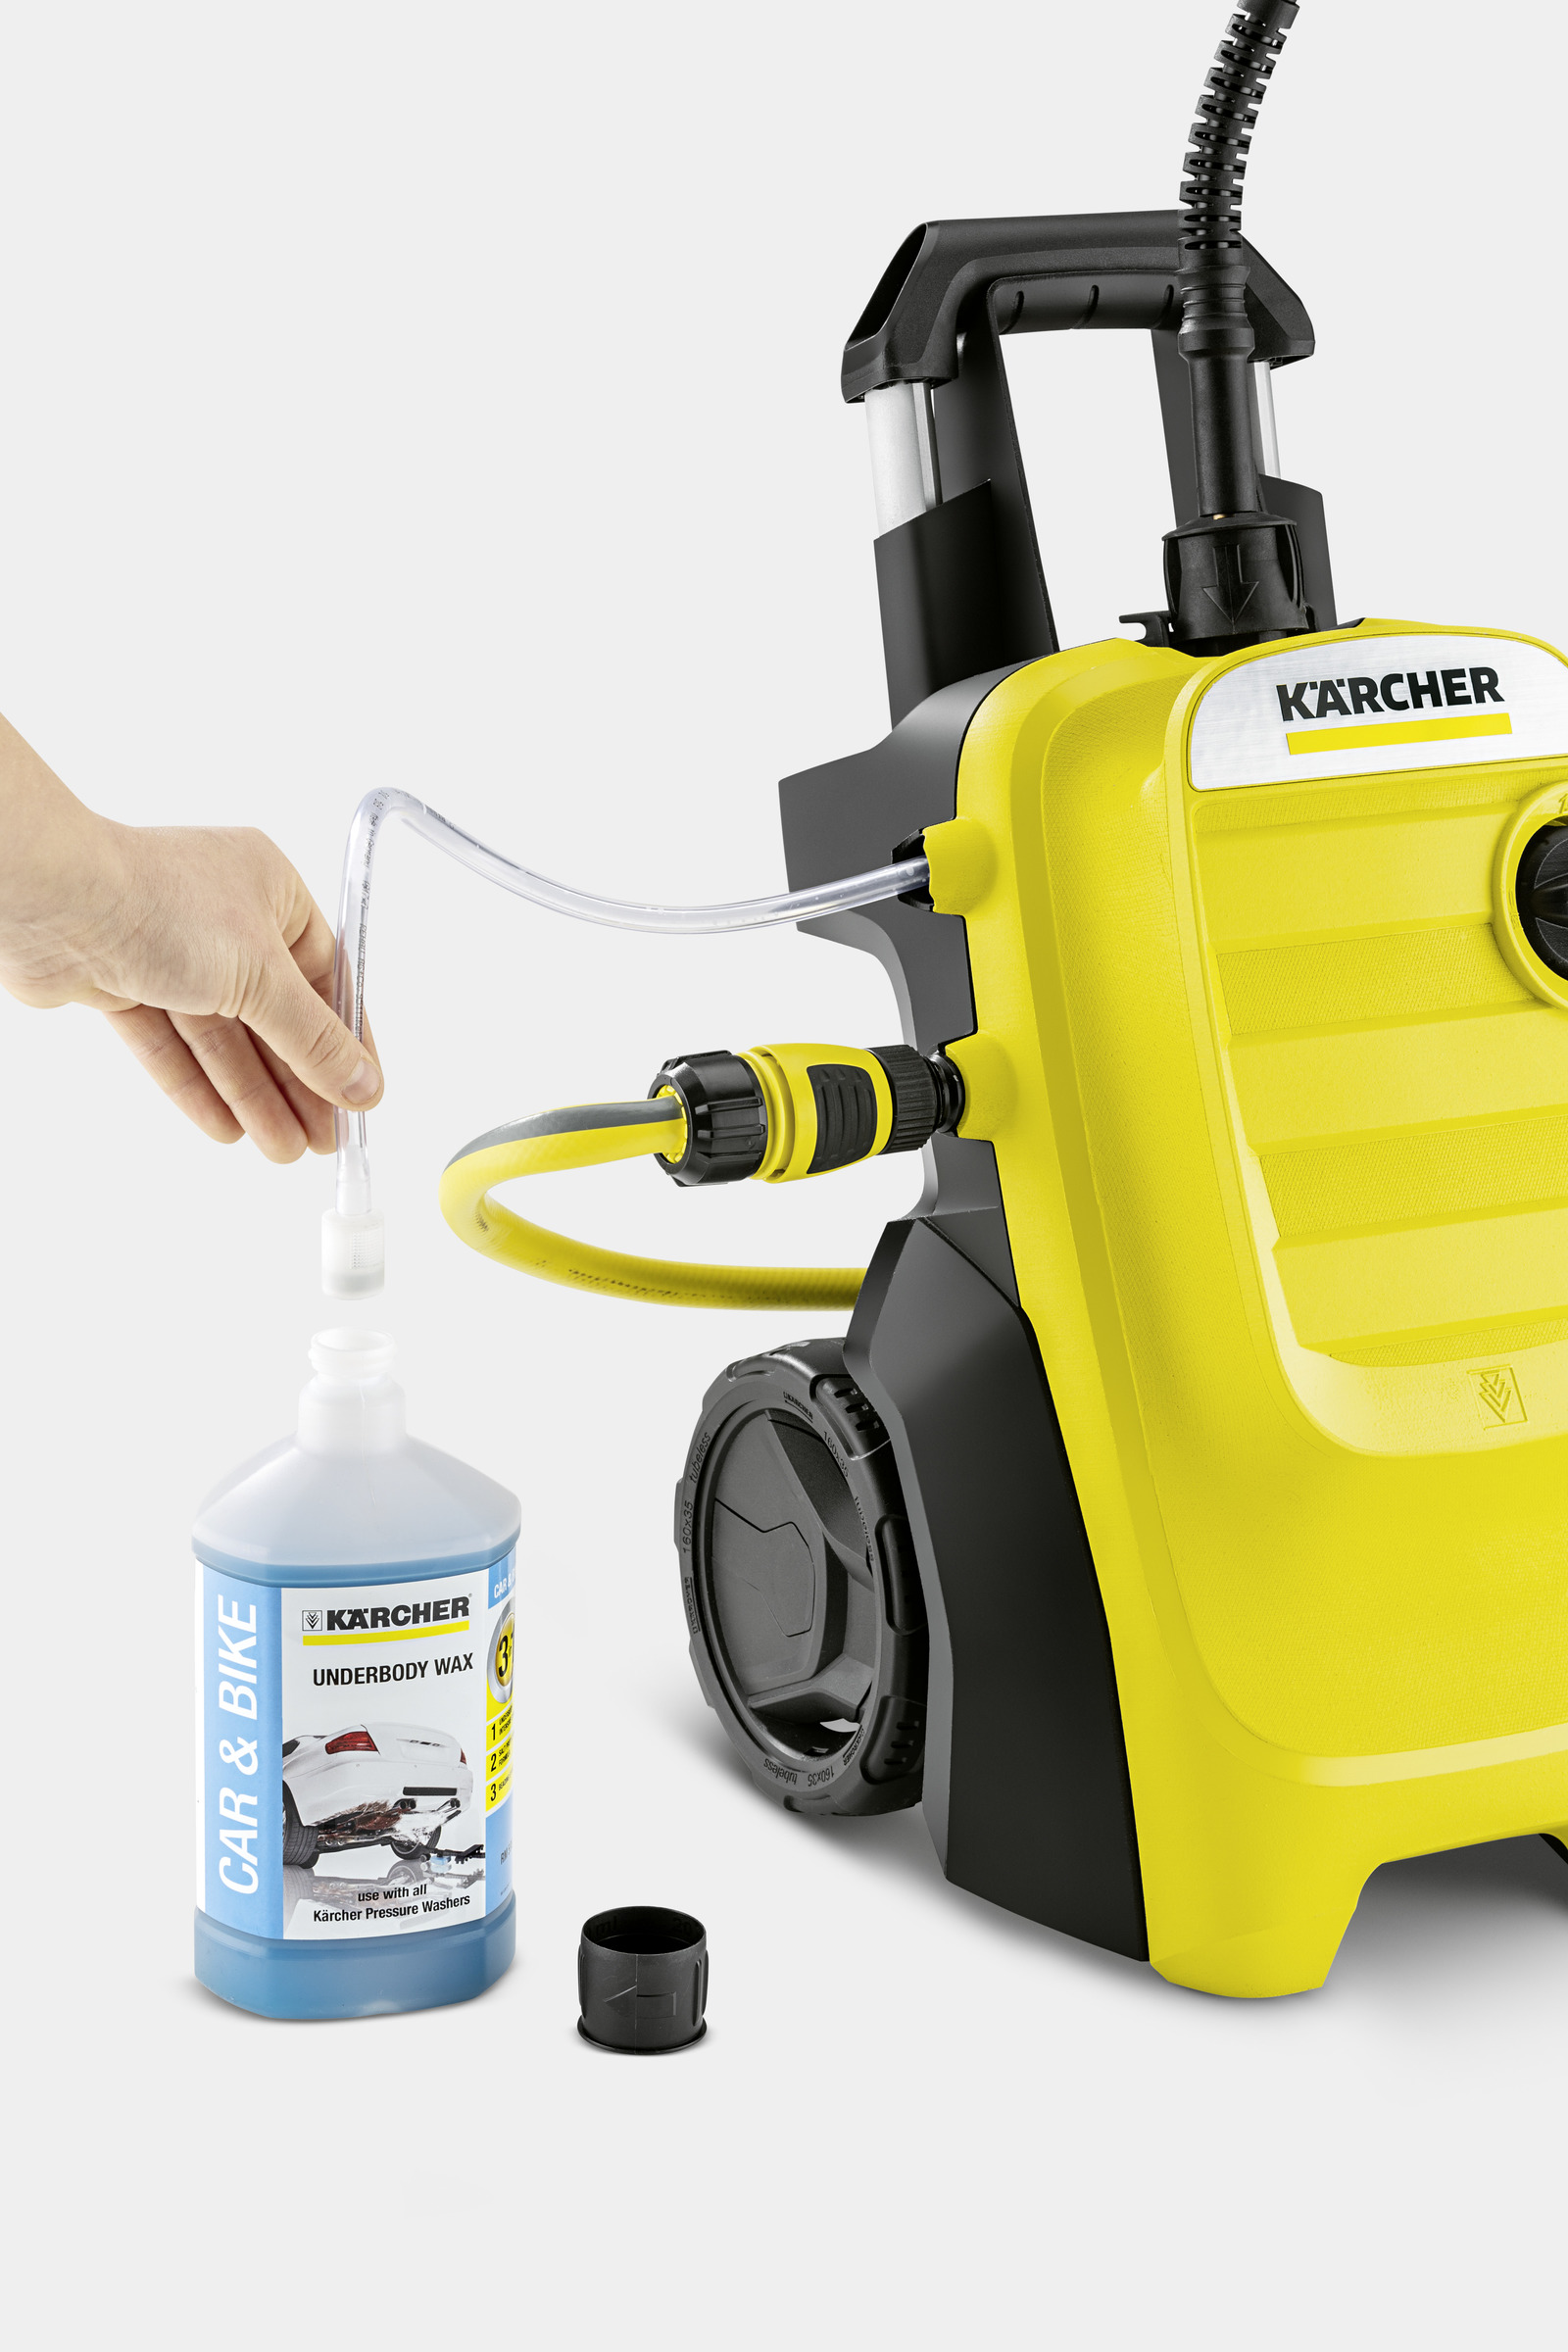 Karcher K4 Compact Pressure Washer